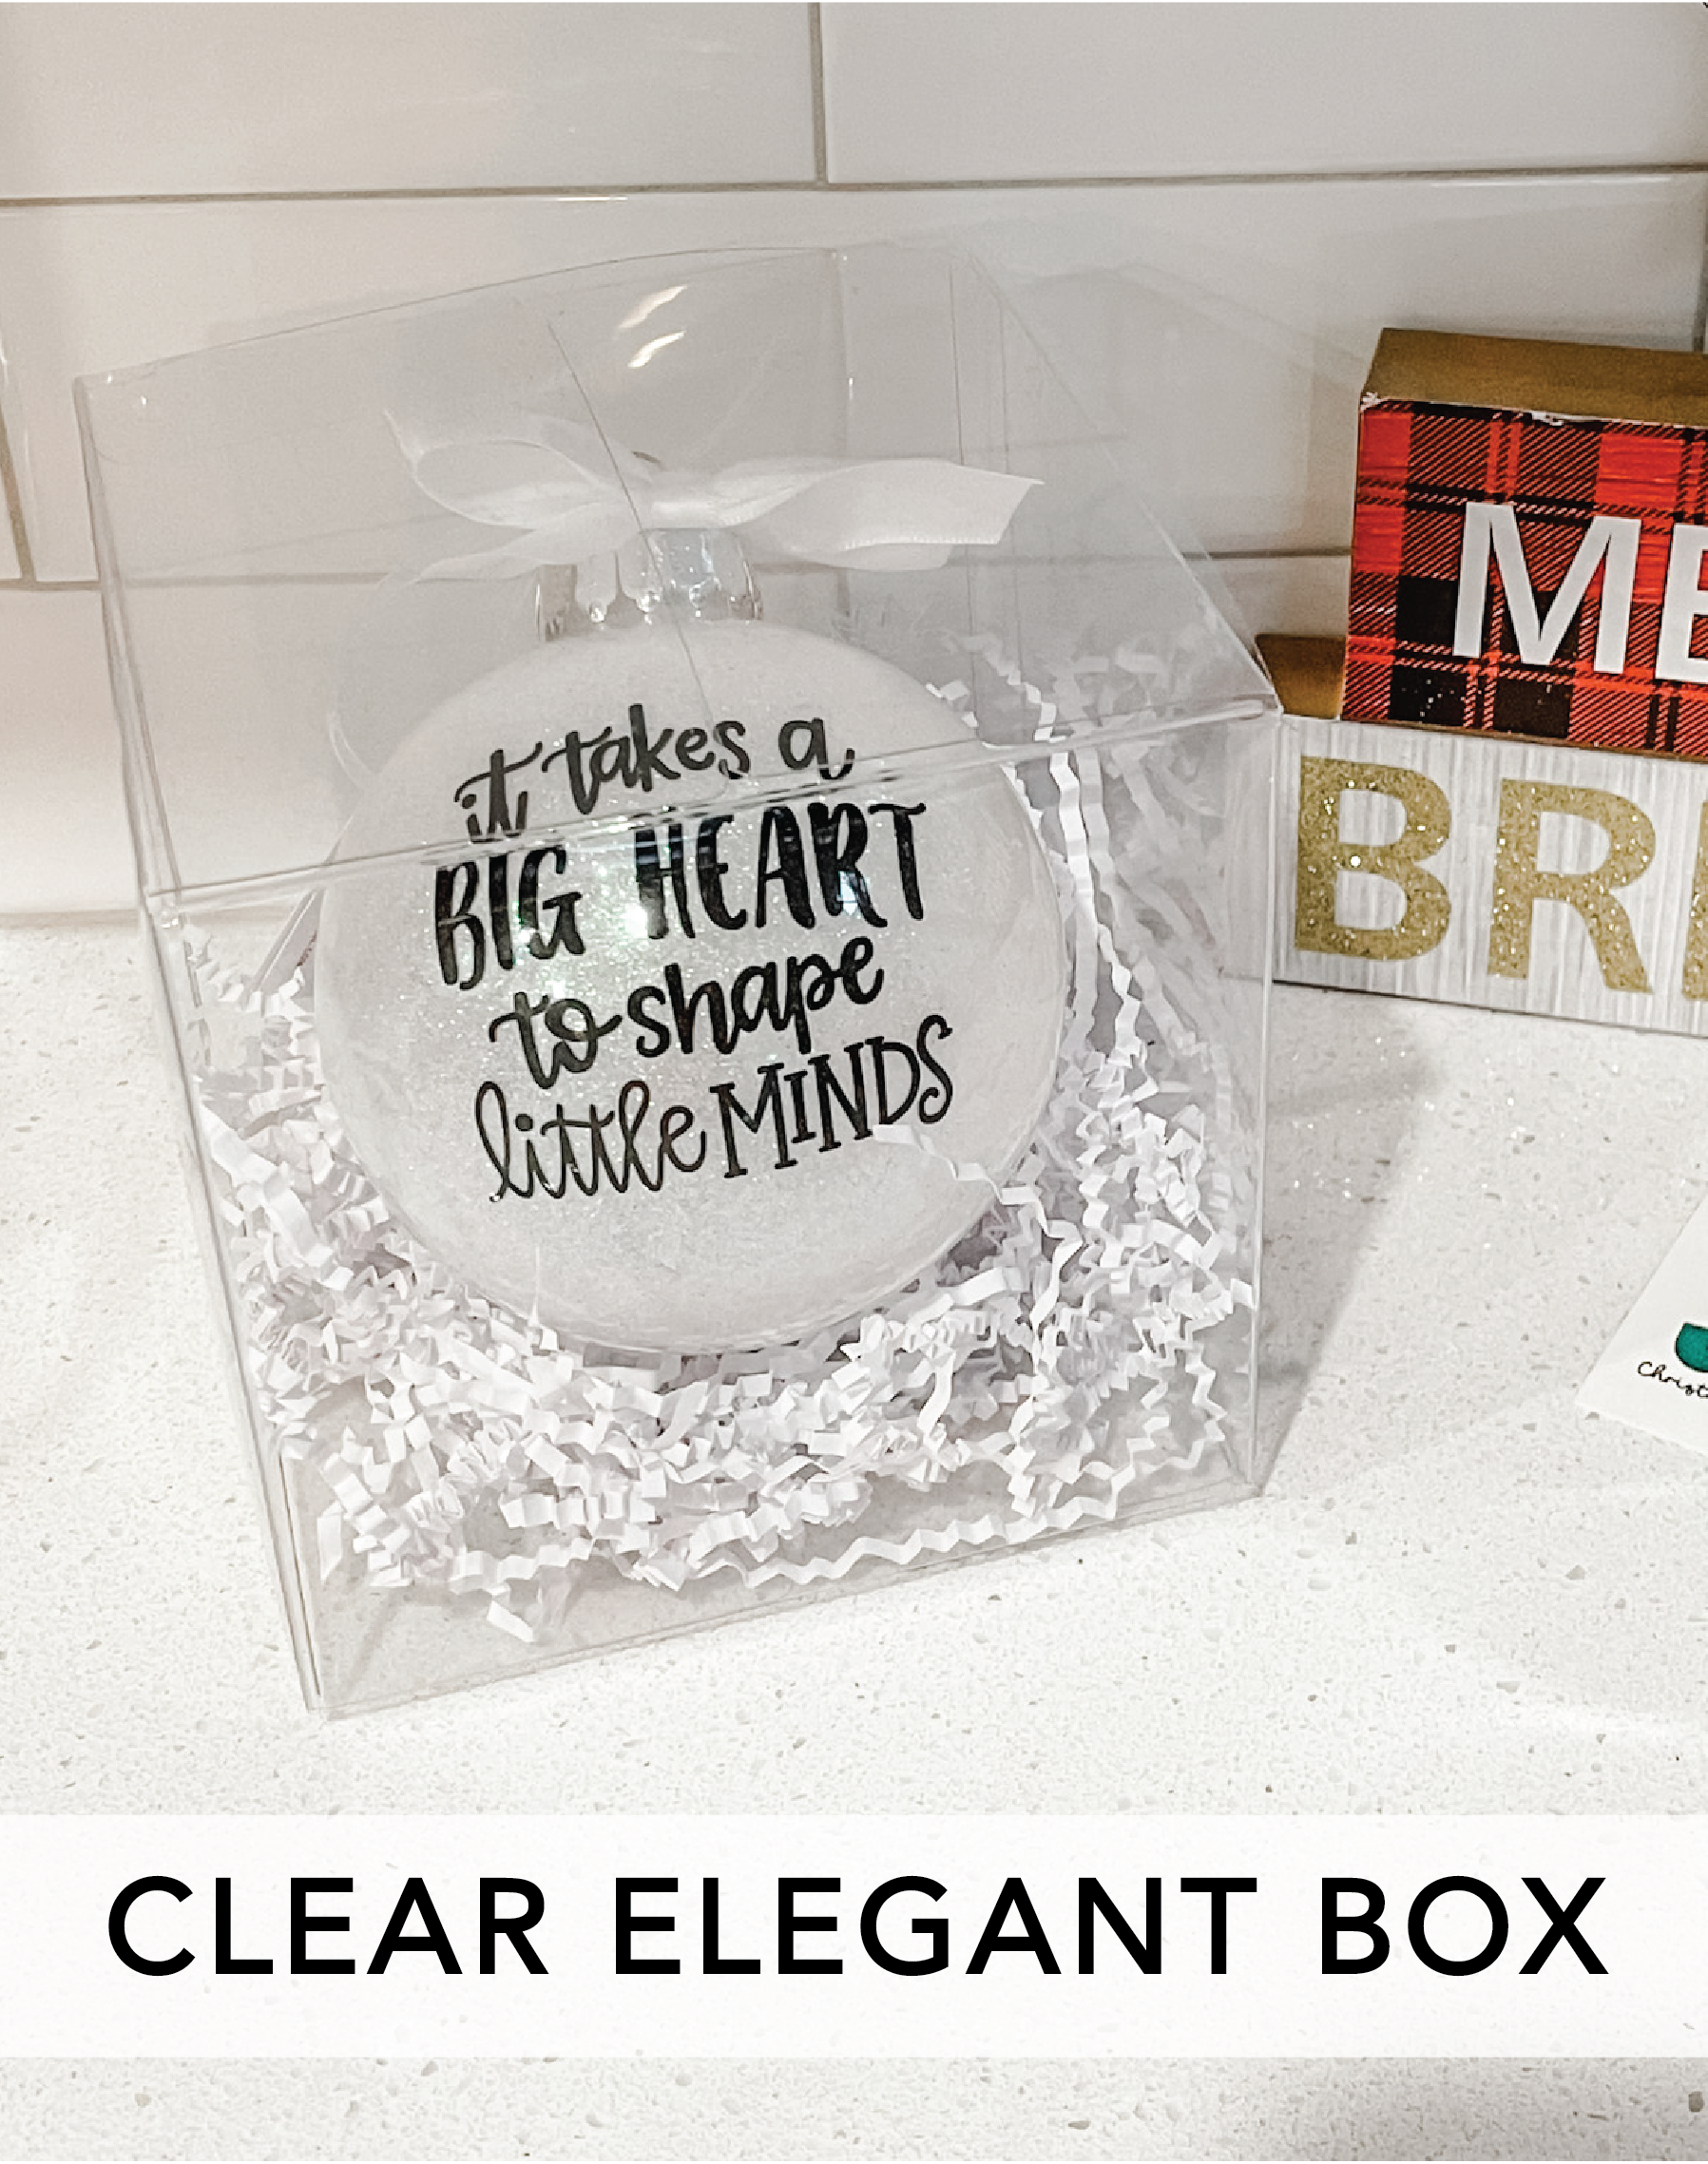 CLEAR ELEGANT BOX